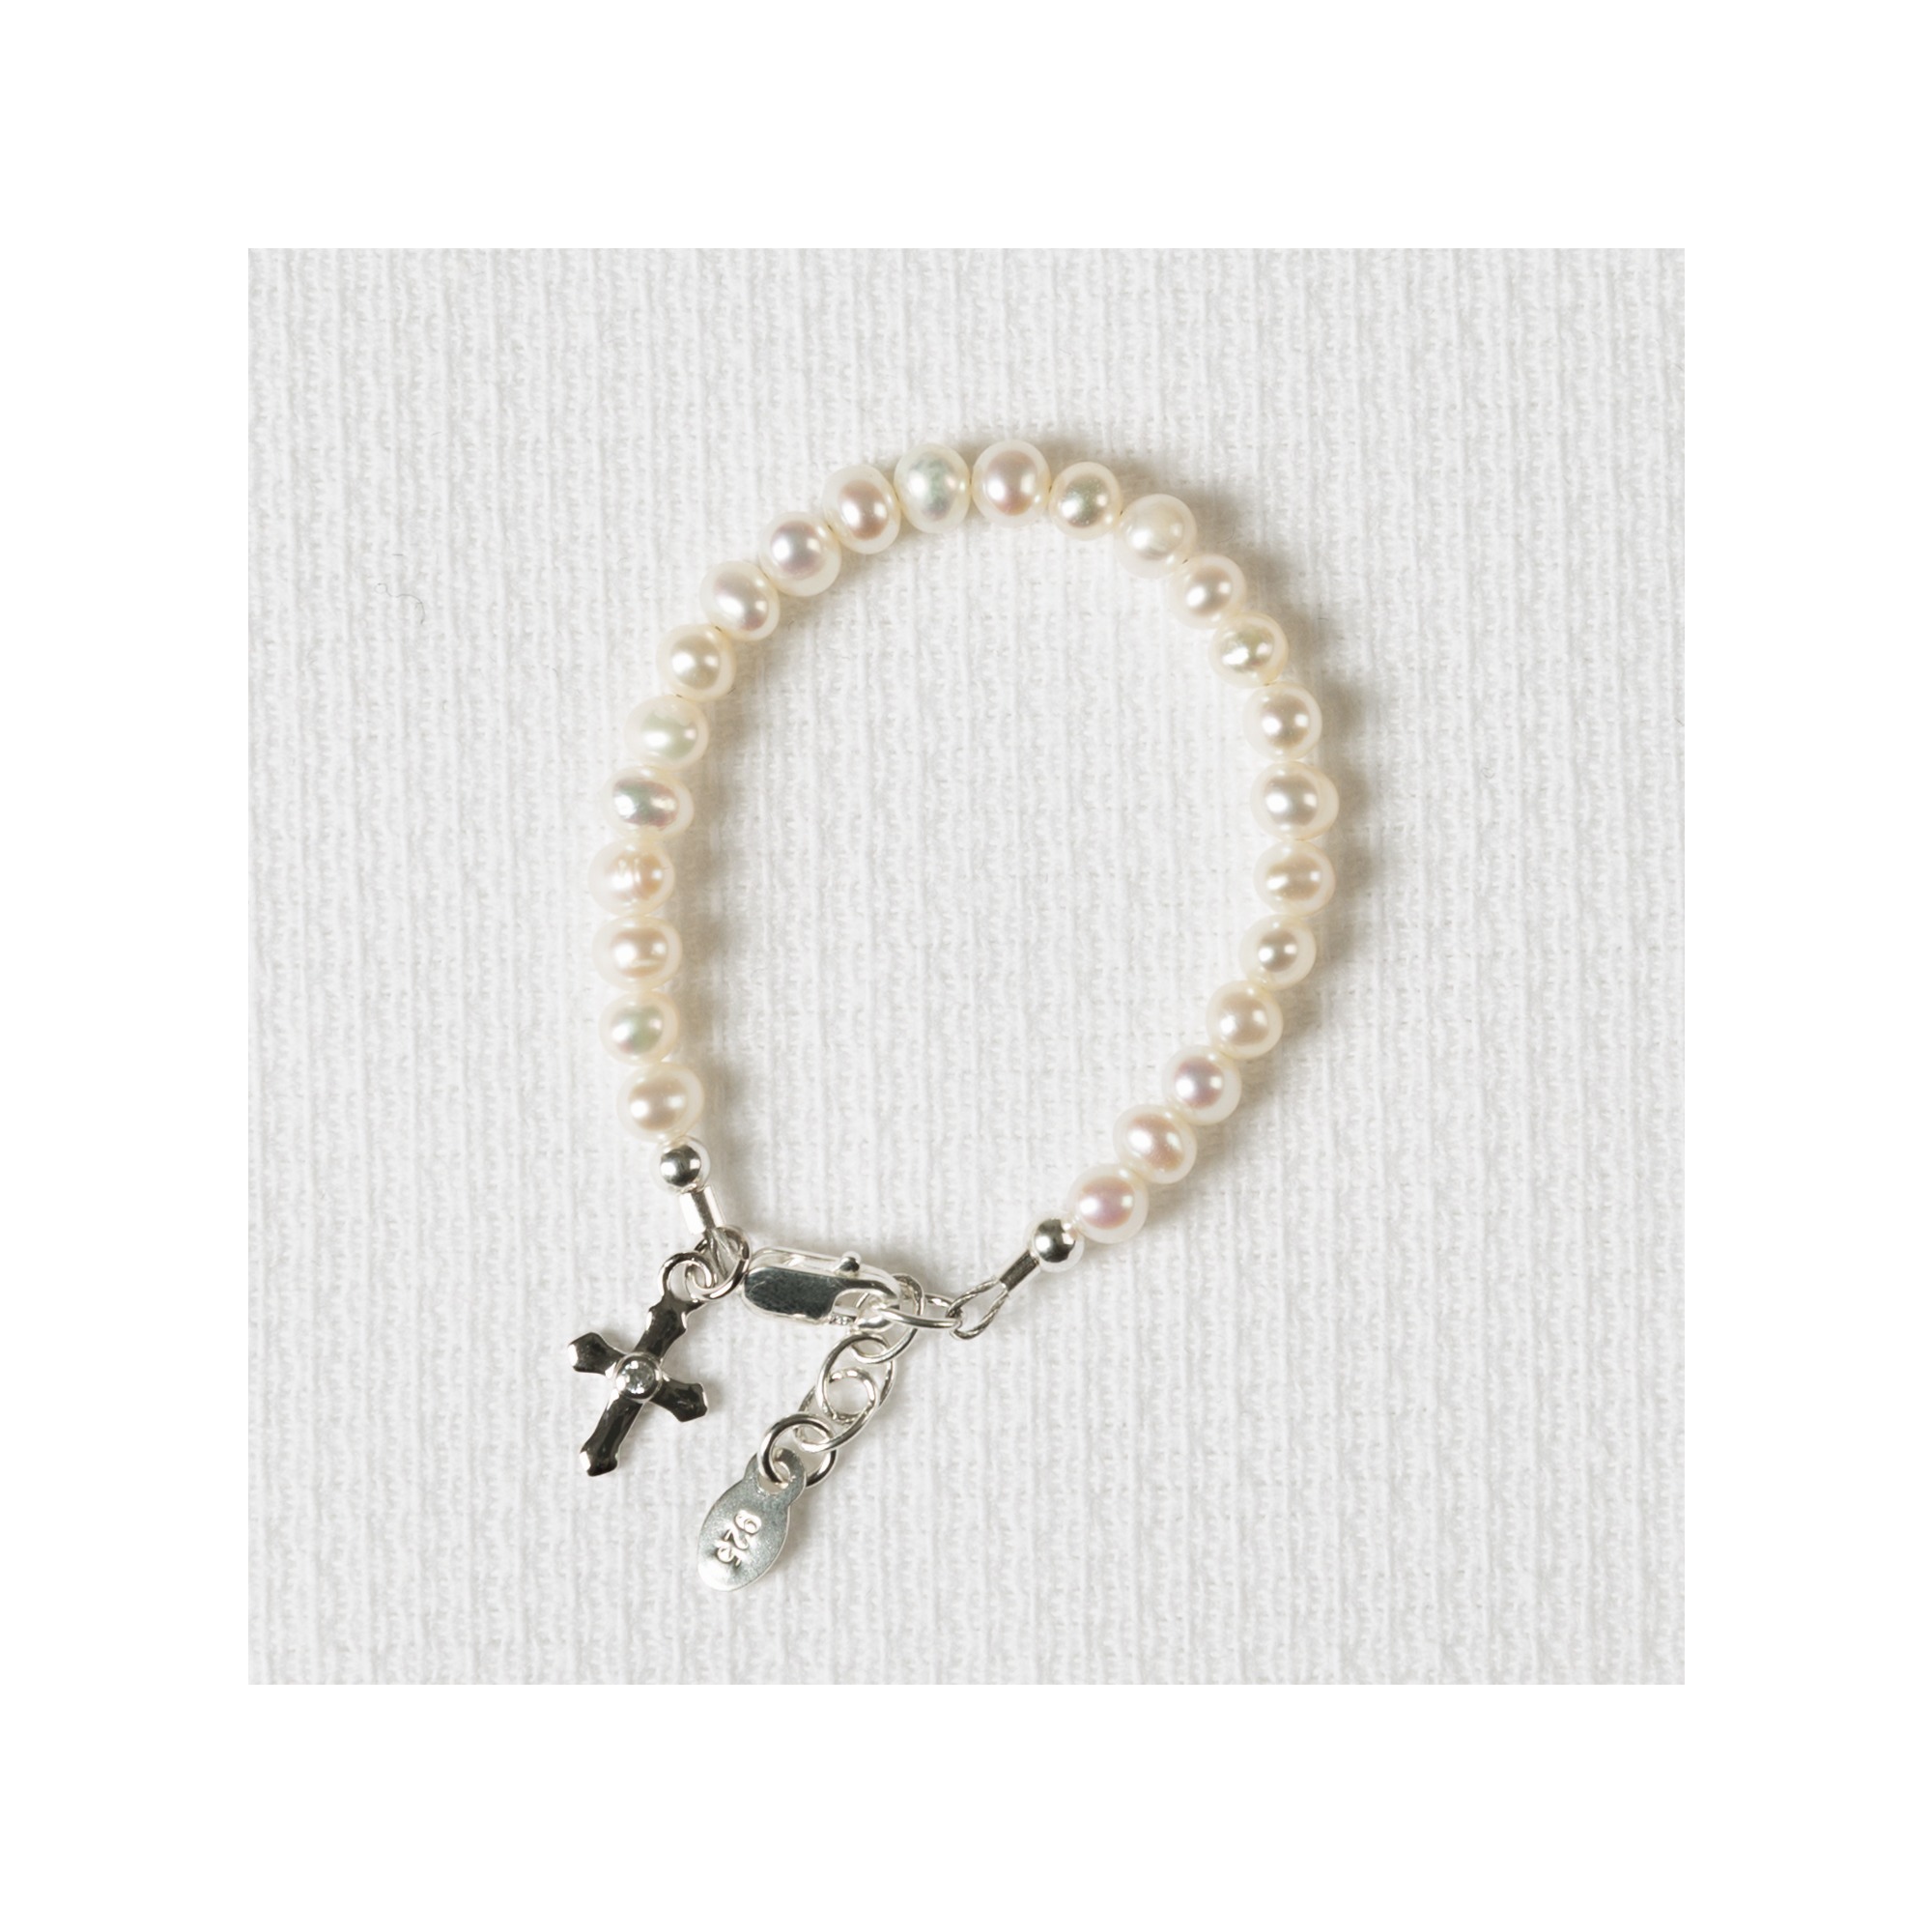 Christening White Cultured Fresh Water Pearls with Sterling Silver Cross Luxury Keepsake Unisex Baby Bracelet BFWCD 